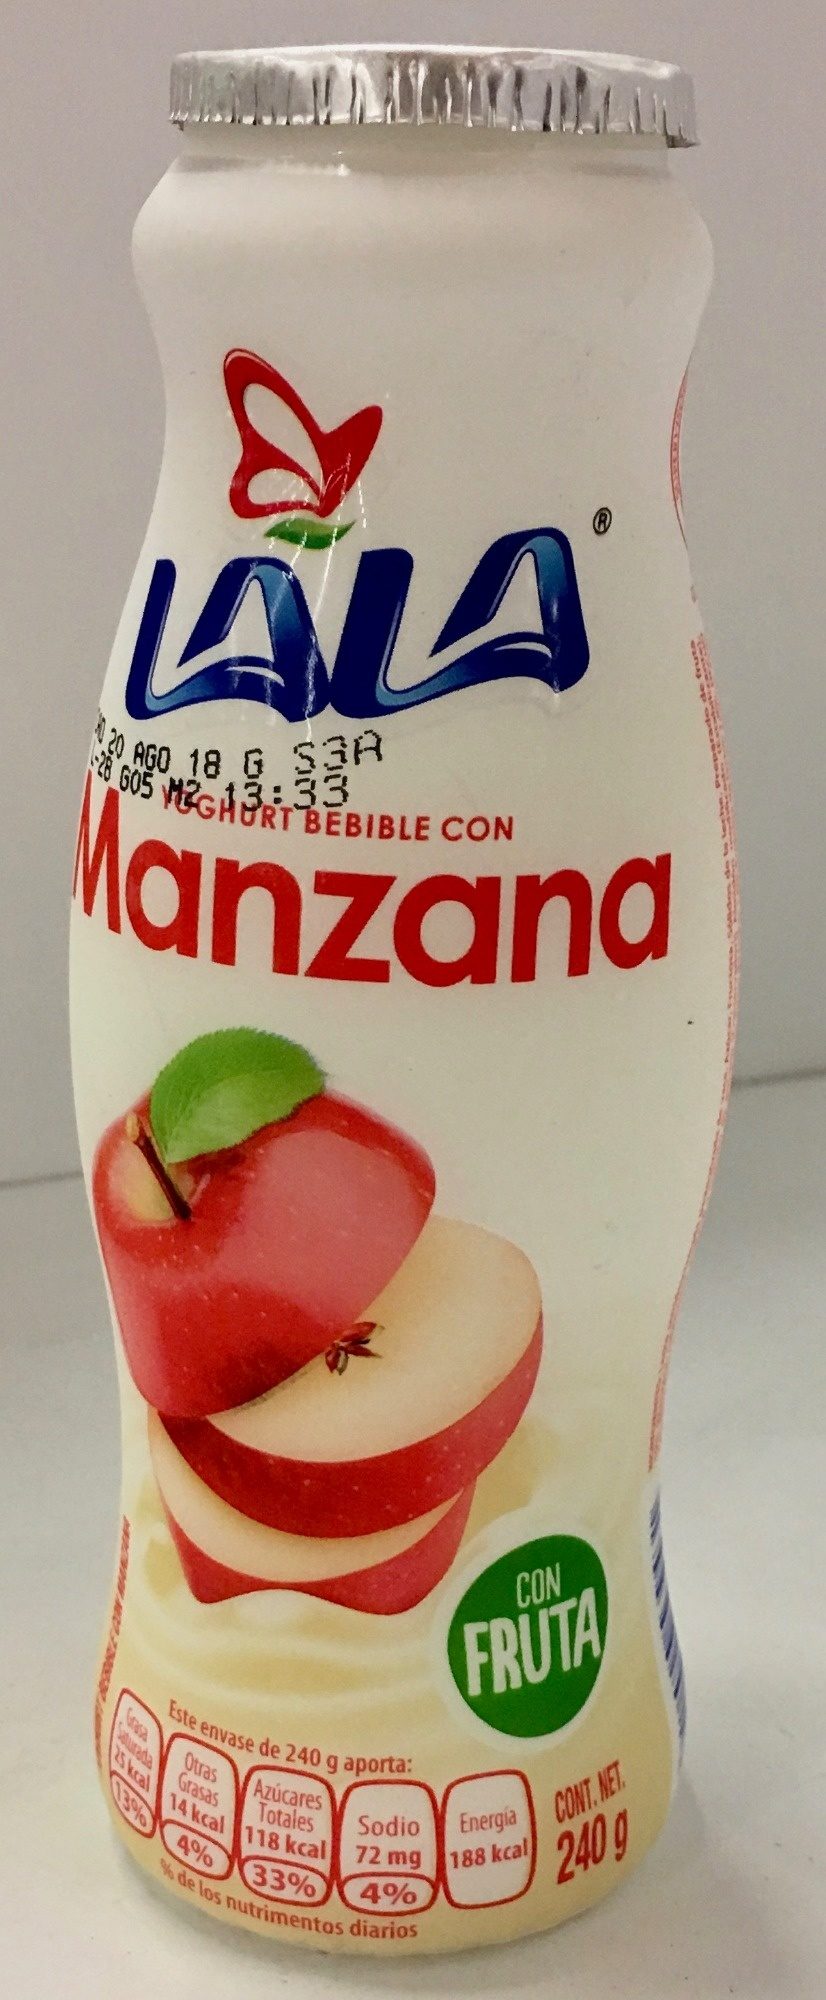 Lala Yoghurt bebible con Manzana - Producto